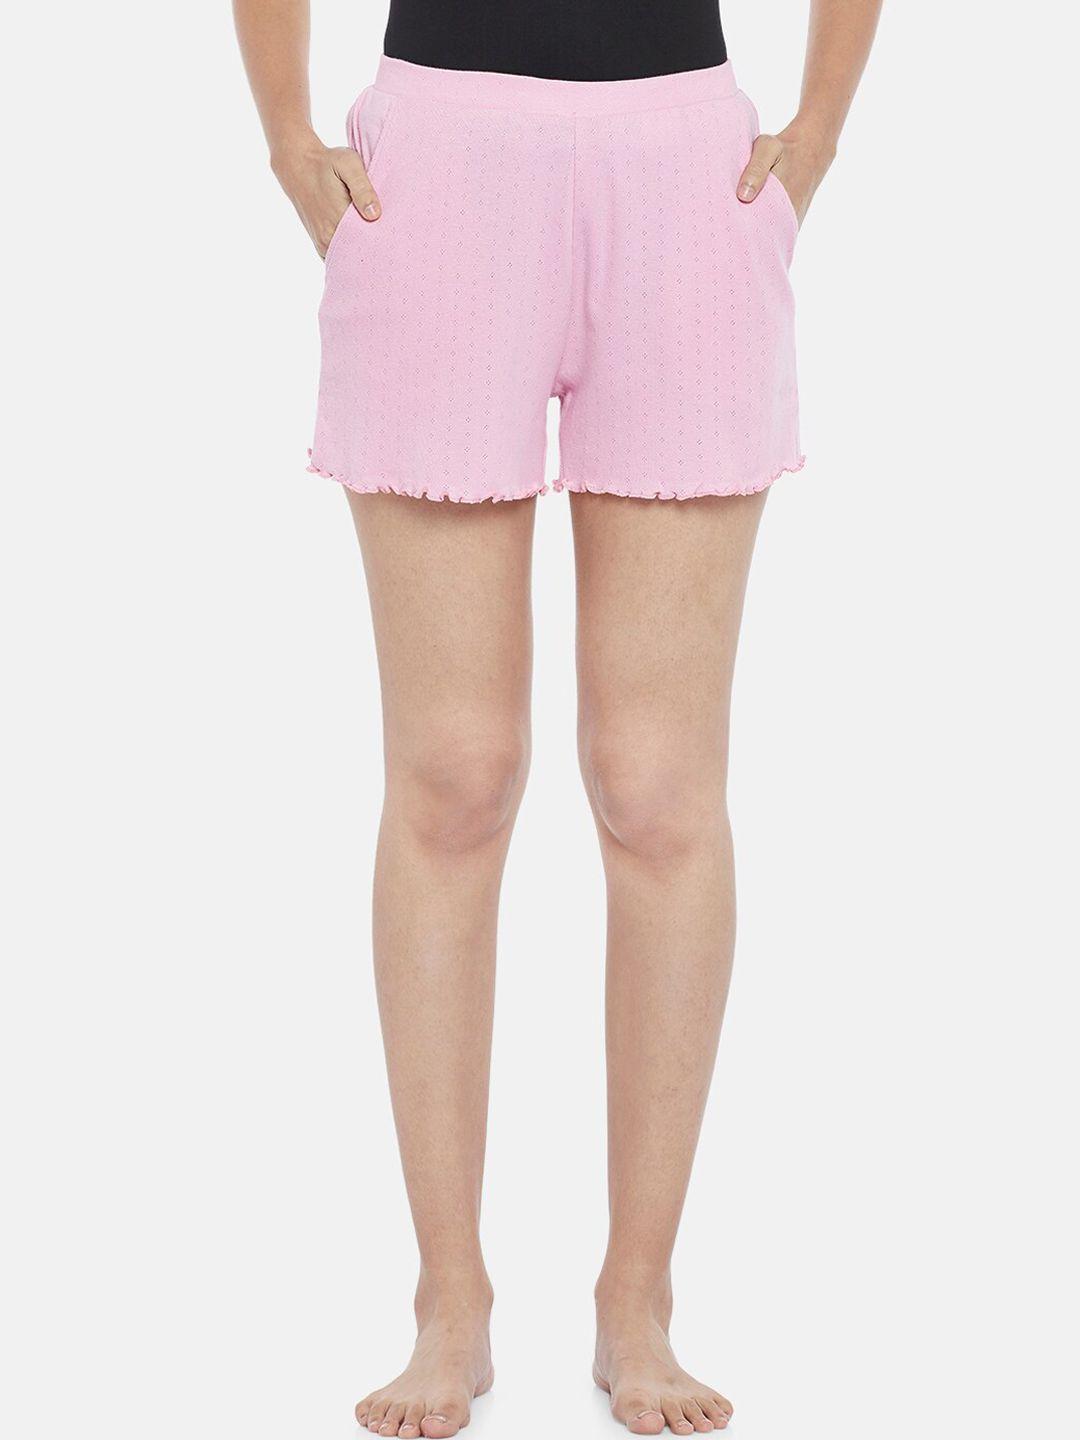 dreamz-by-pantaloons-women-lavender-solid-cotton-lounge-shorts